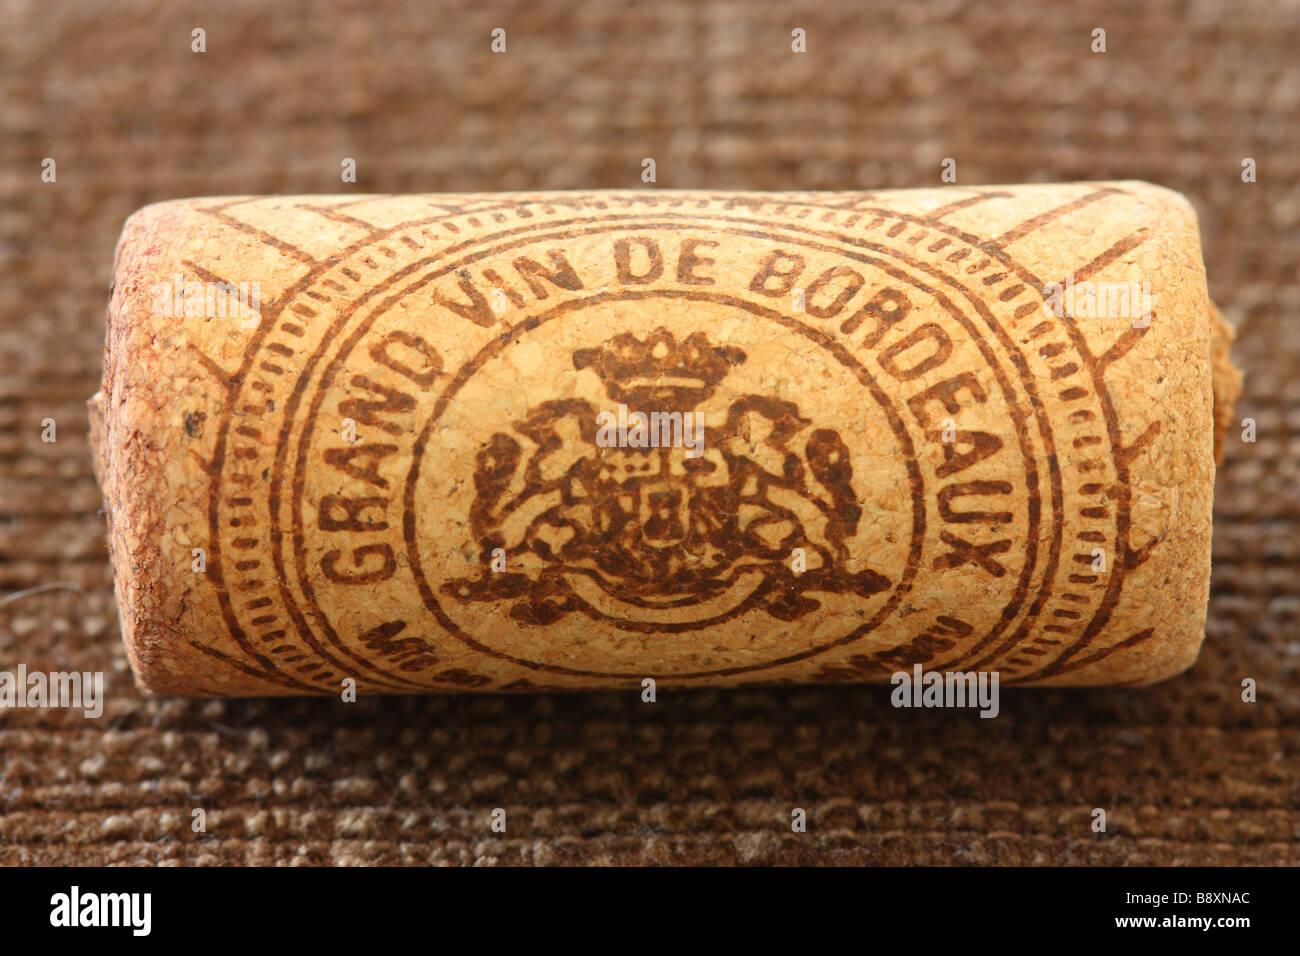 Grand vin de Bordeaux crest on tha wine cork stopper Stock Photo